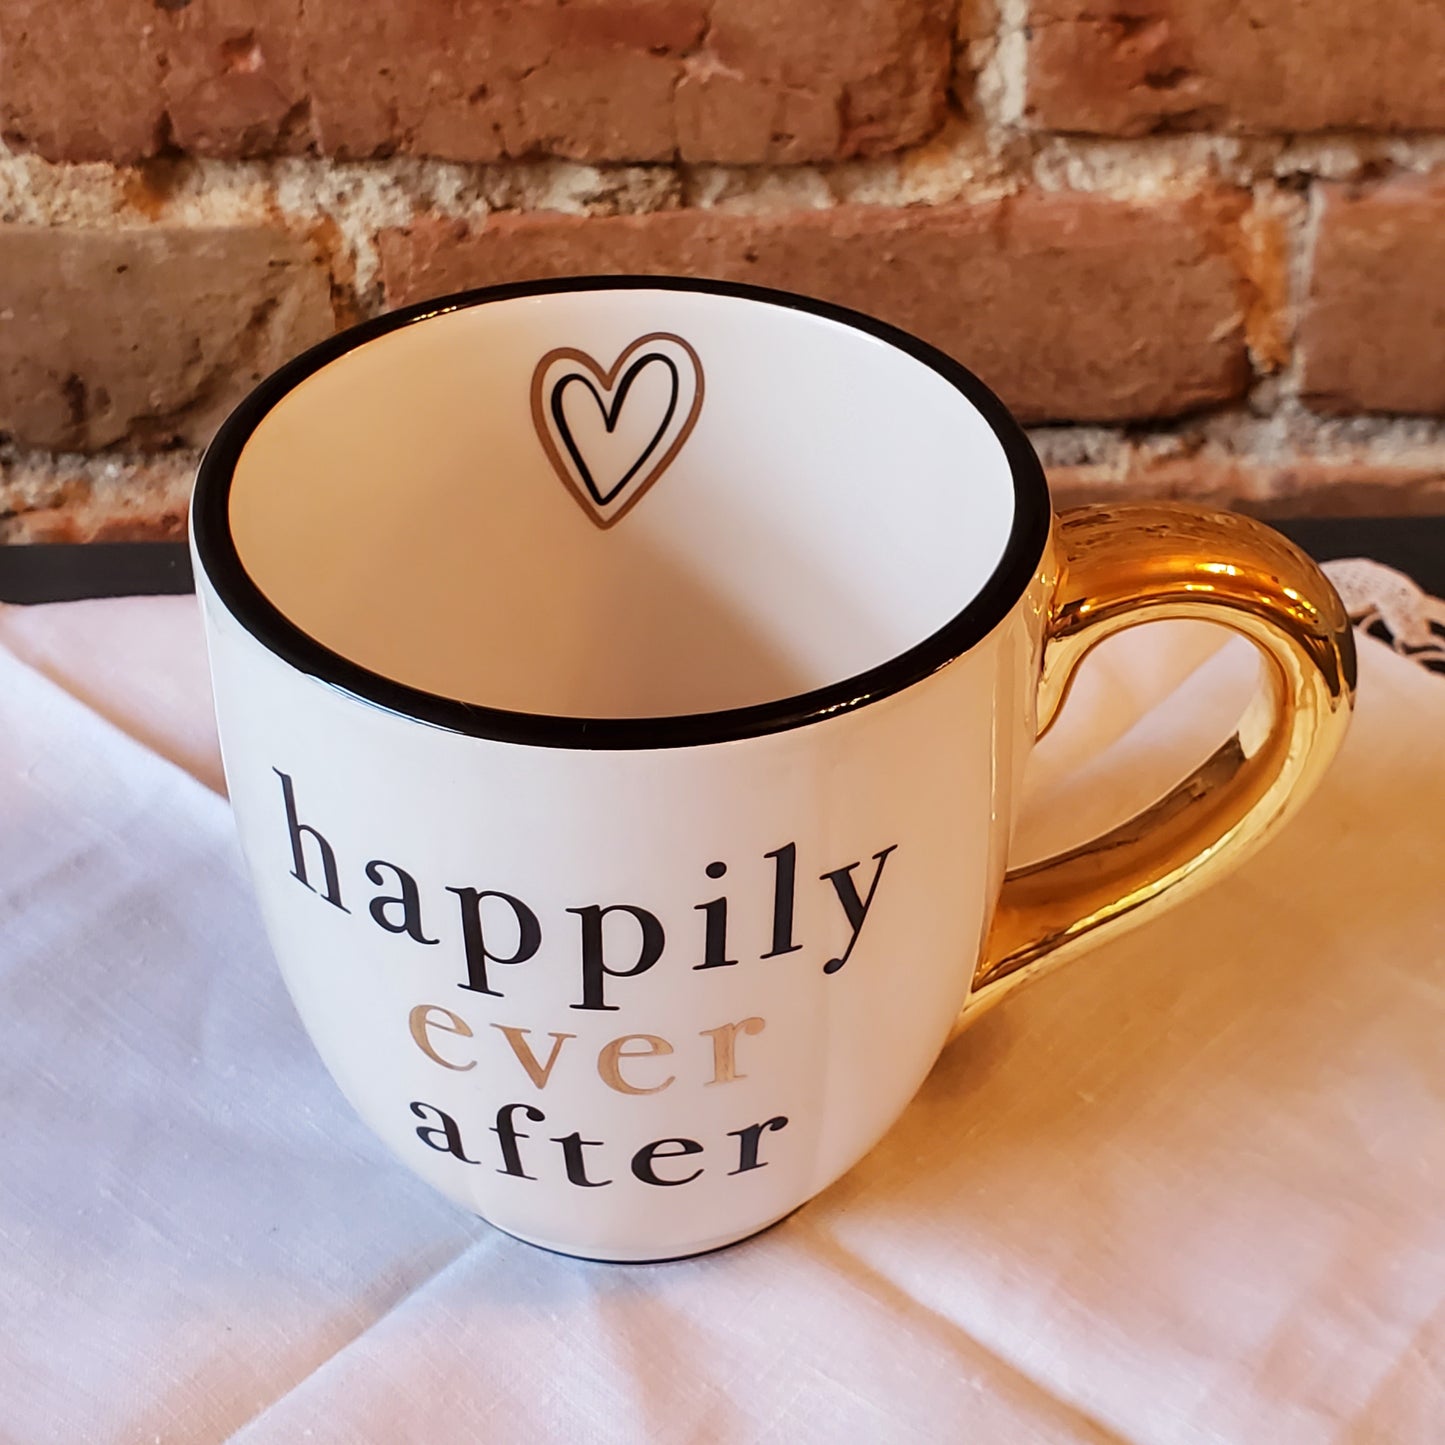 Mug - Happily ever after